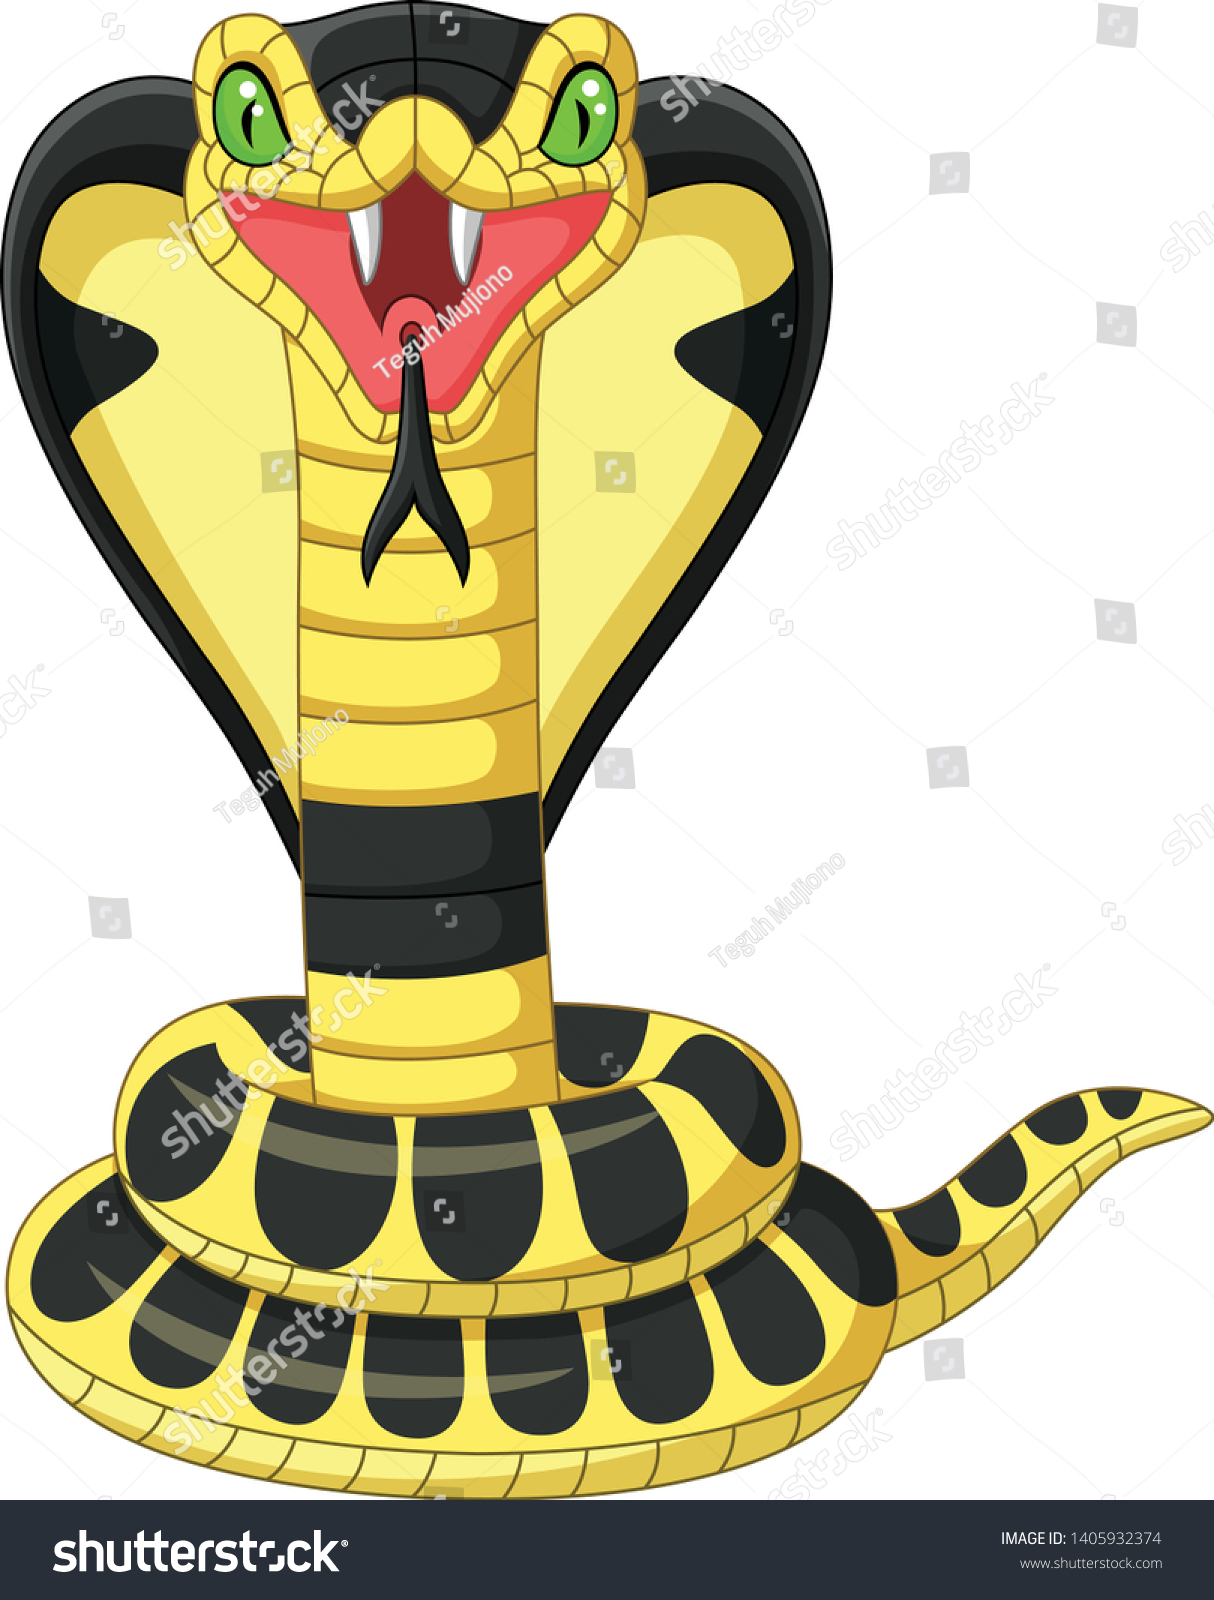 SVG of Cartoon king cobra snake mascot svg